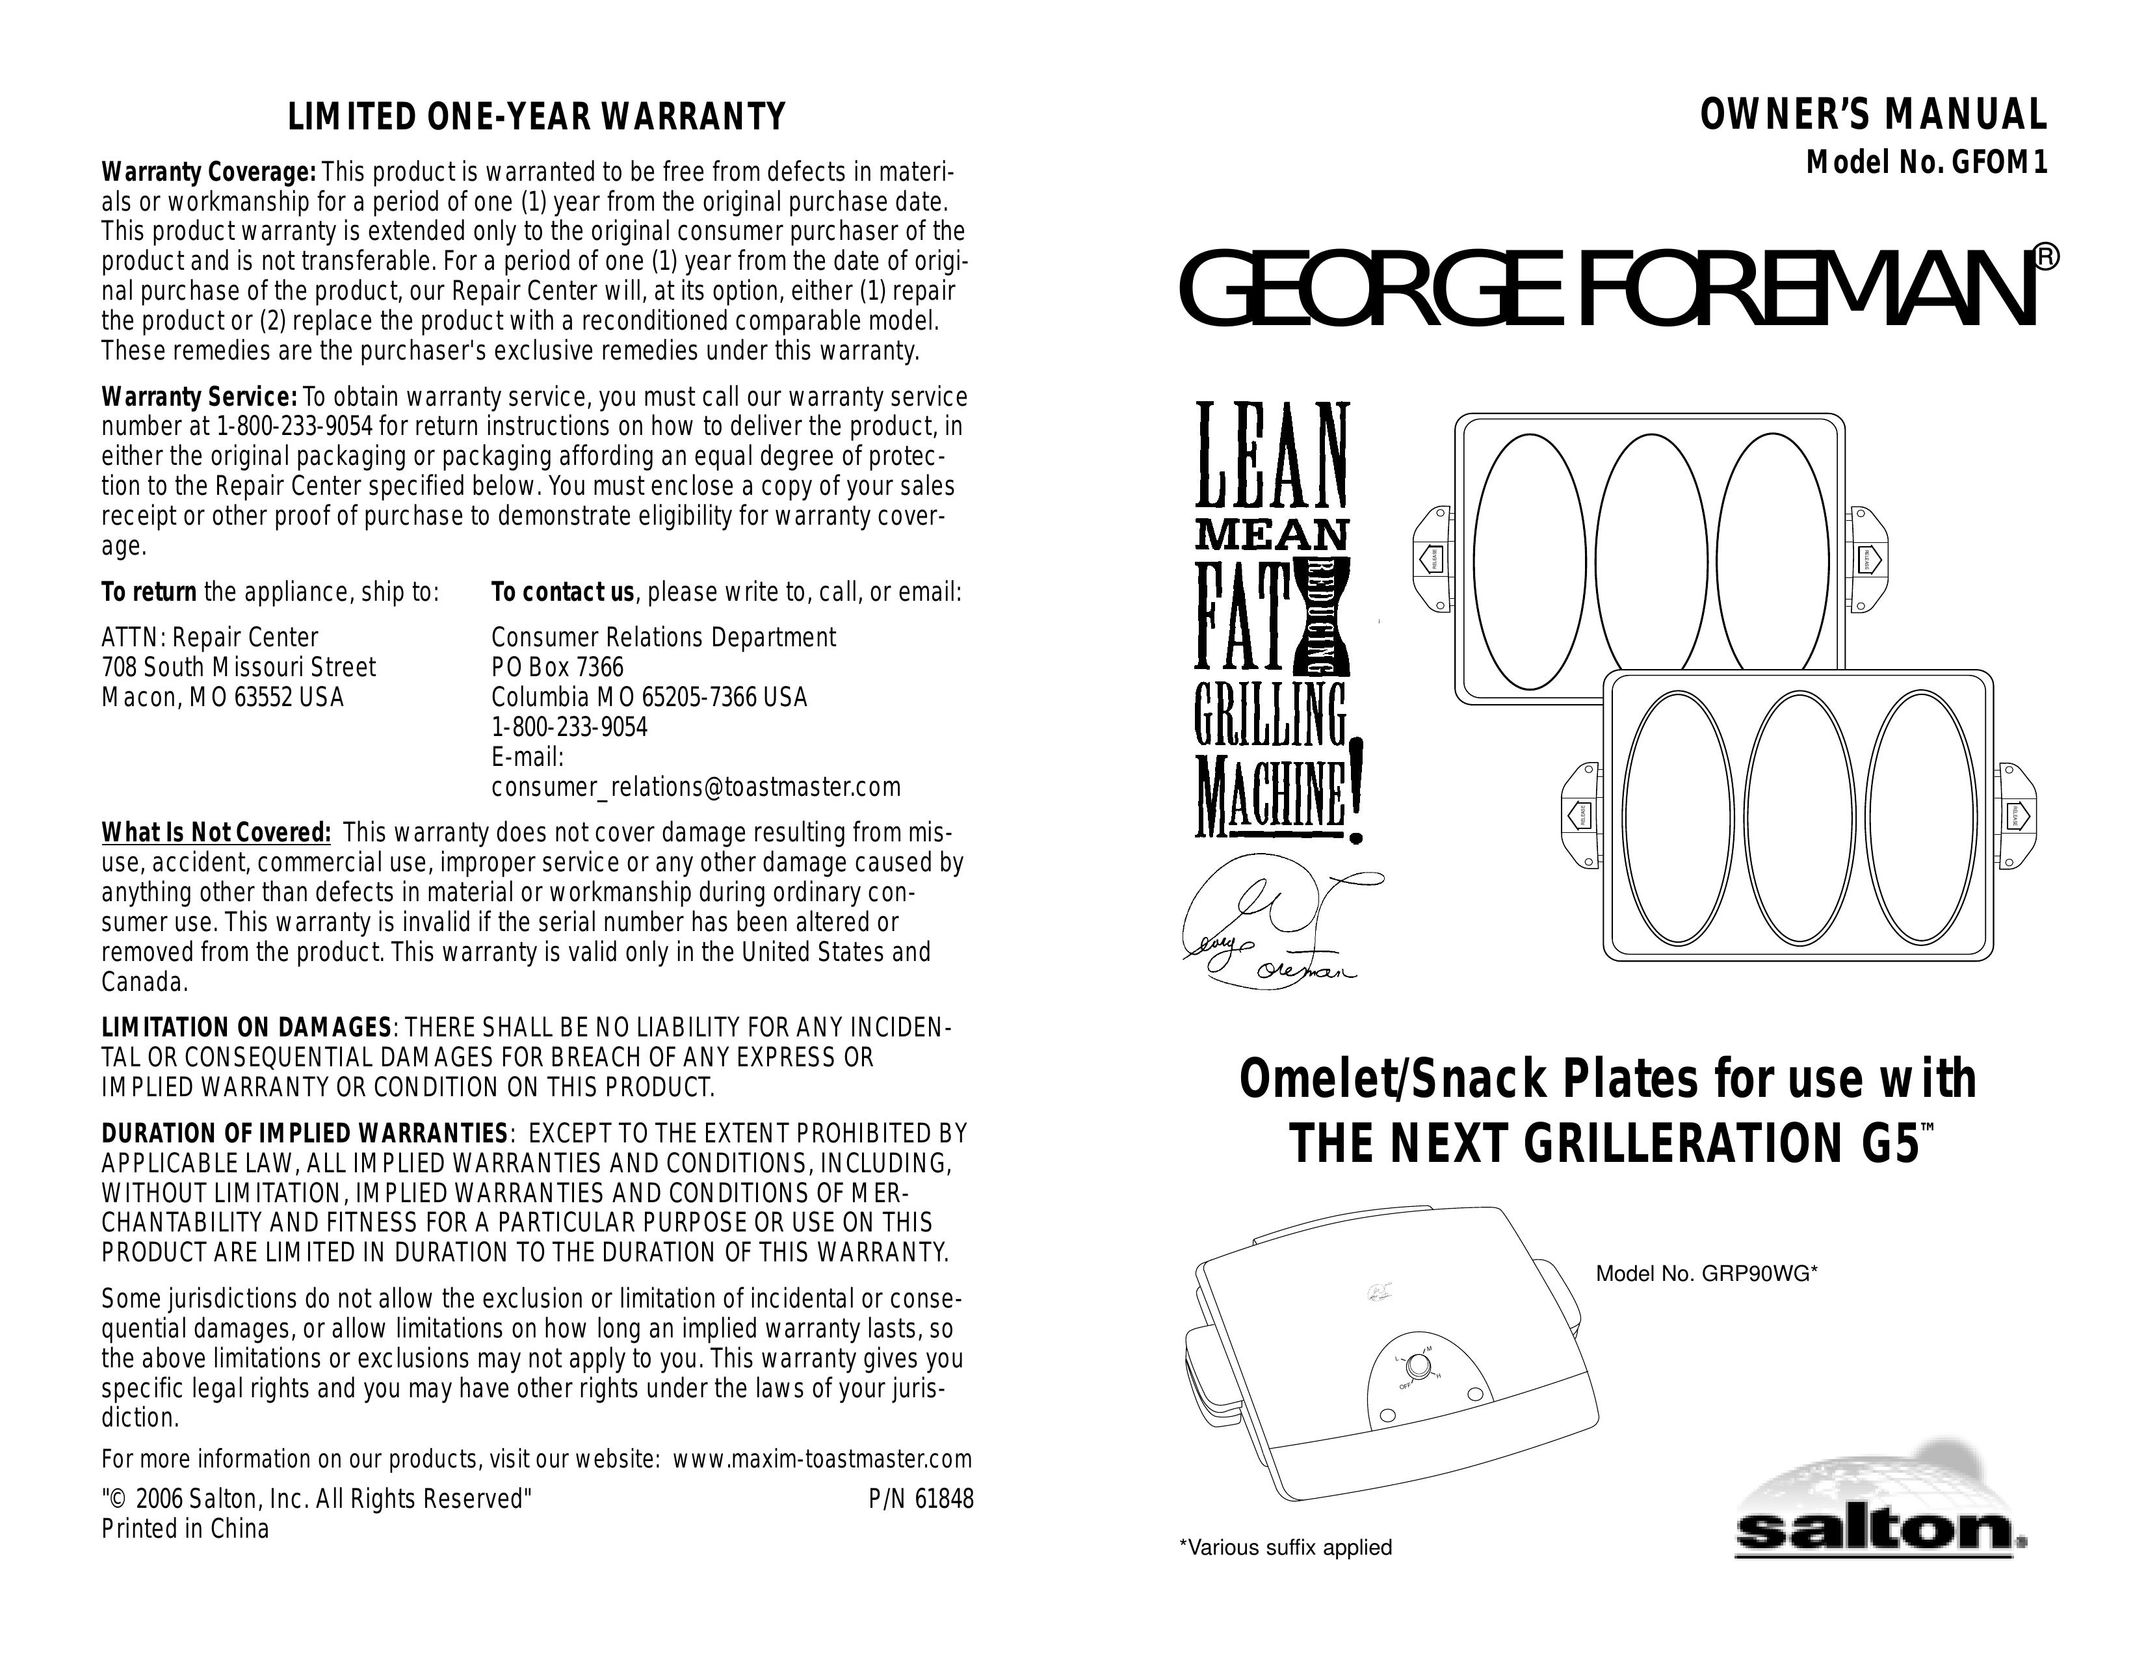 George Foreman GFOM1 Kitchen Grill User Manual